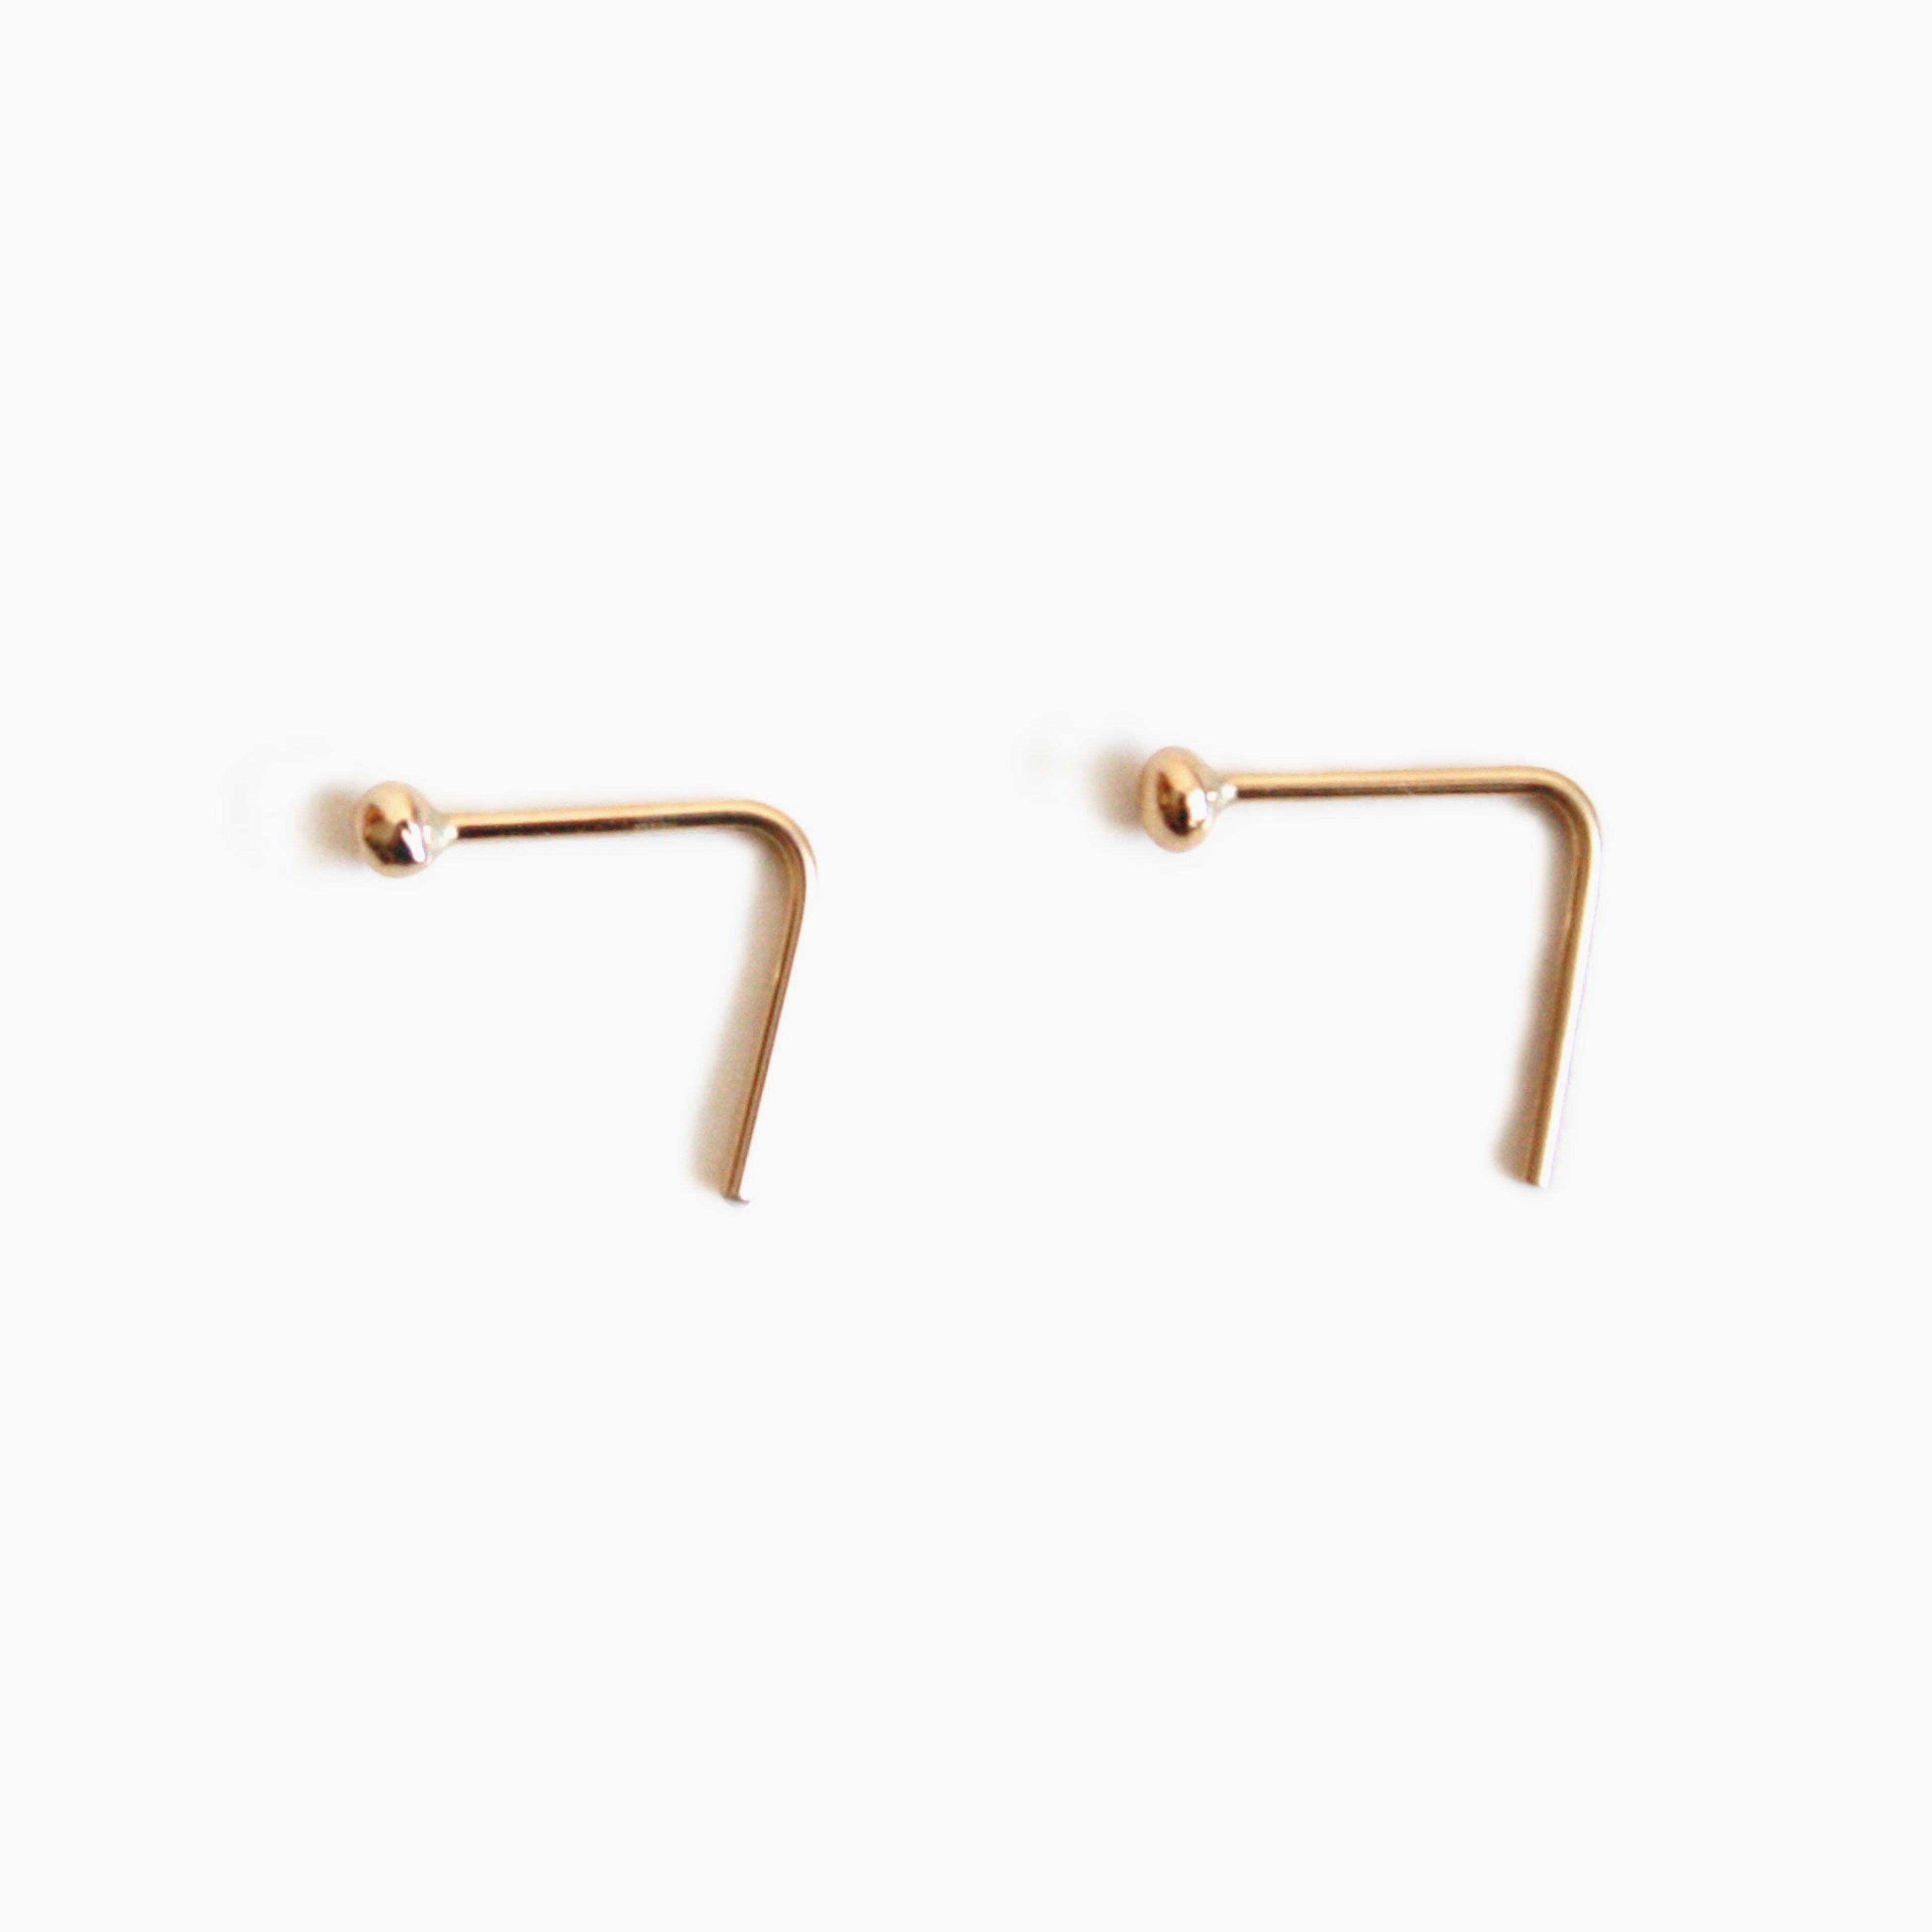 14K Gold Tiny Grain Hook Earrings